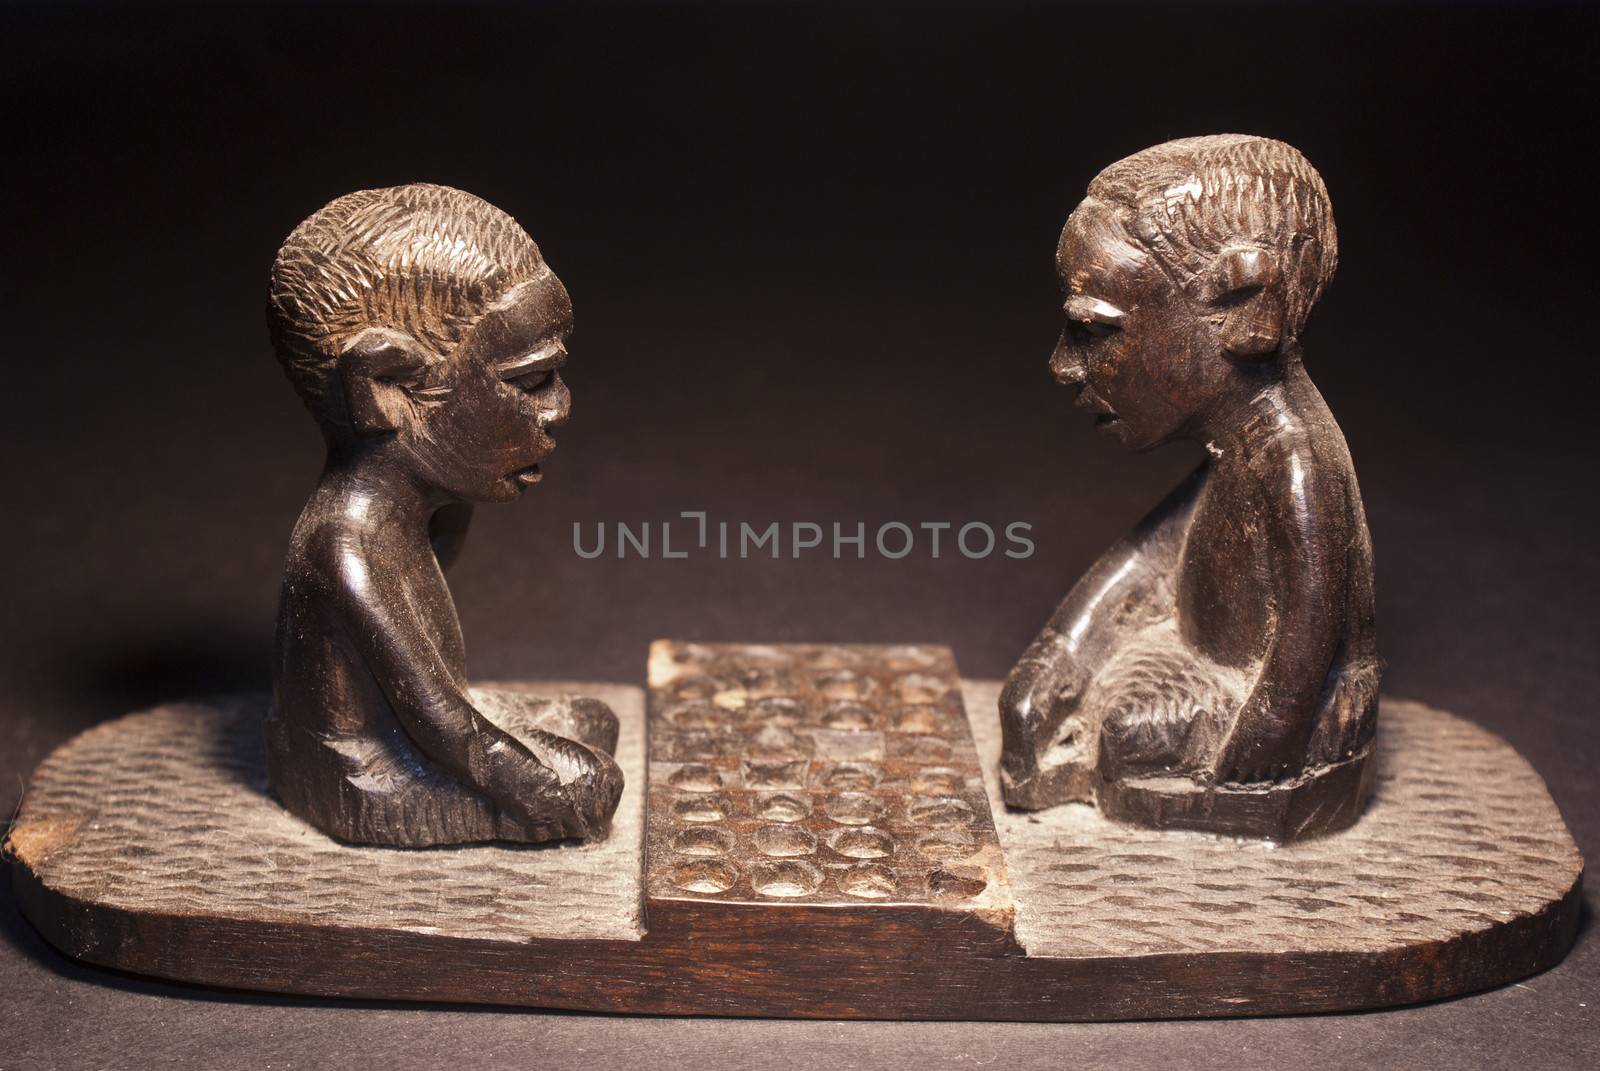 game of checkers in africa by gandolfocannatella